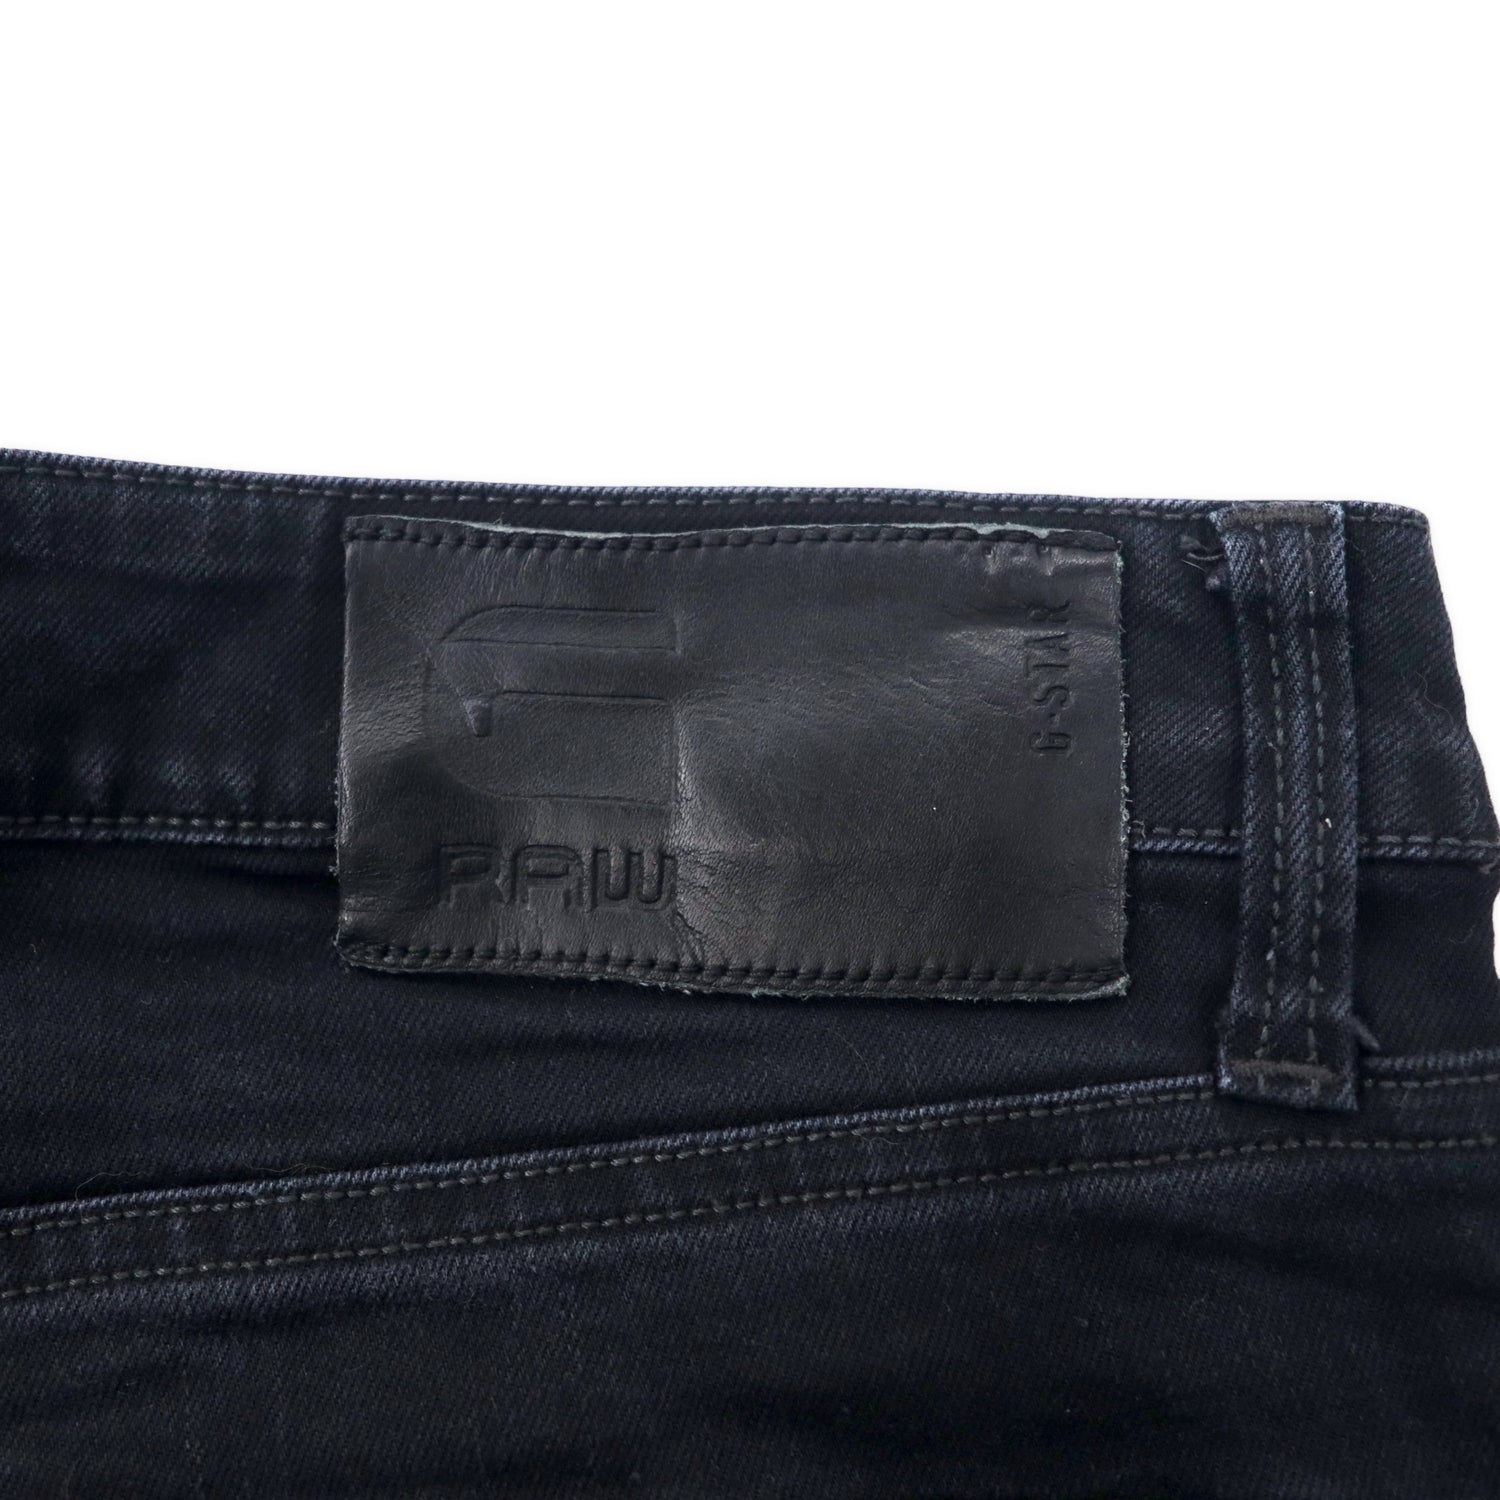 G-STAR RAW Black Denim Pants 32 Slim Stretch 3301